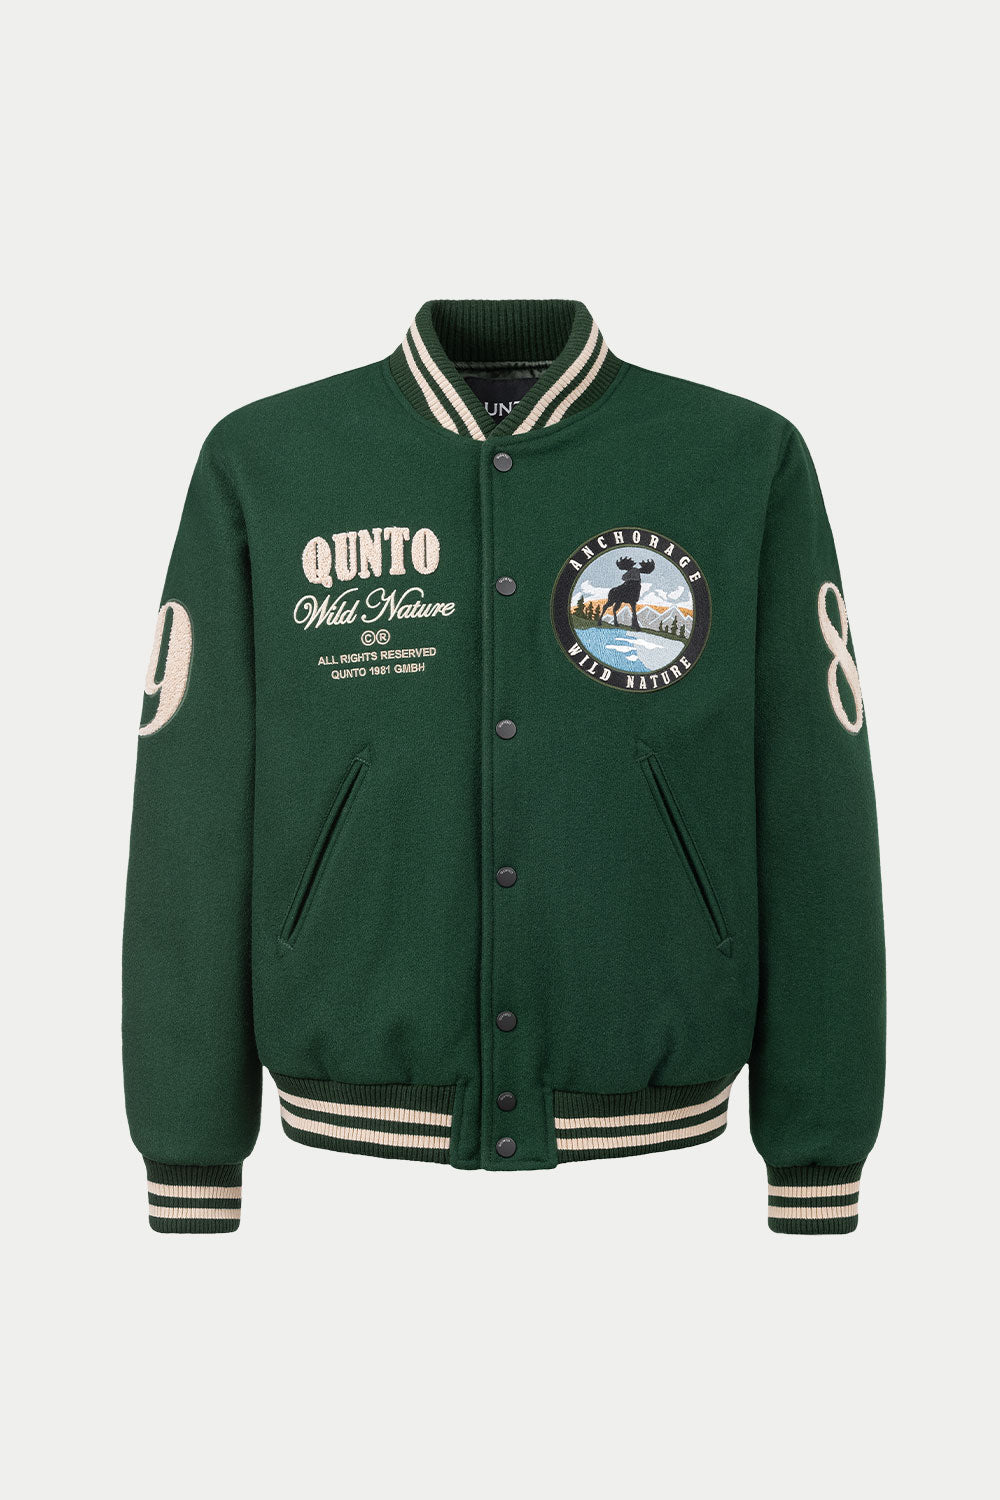 Moose Green College Jacket